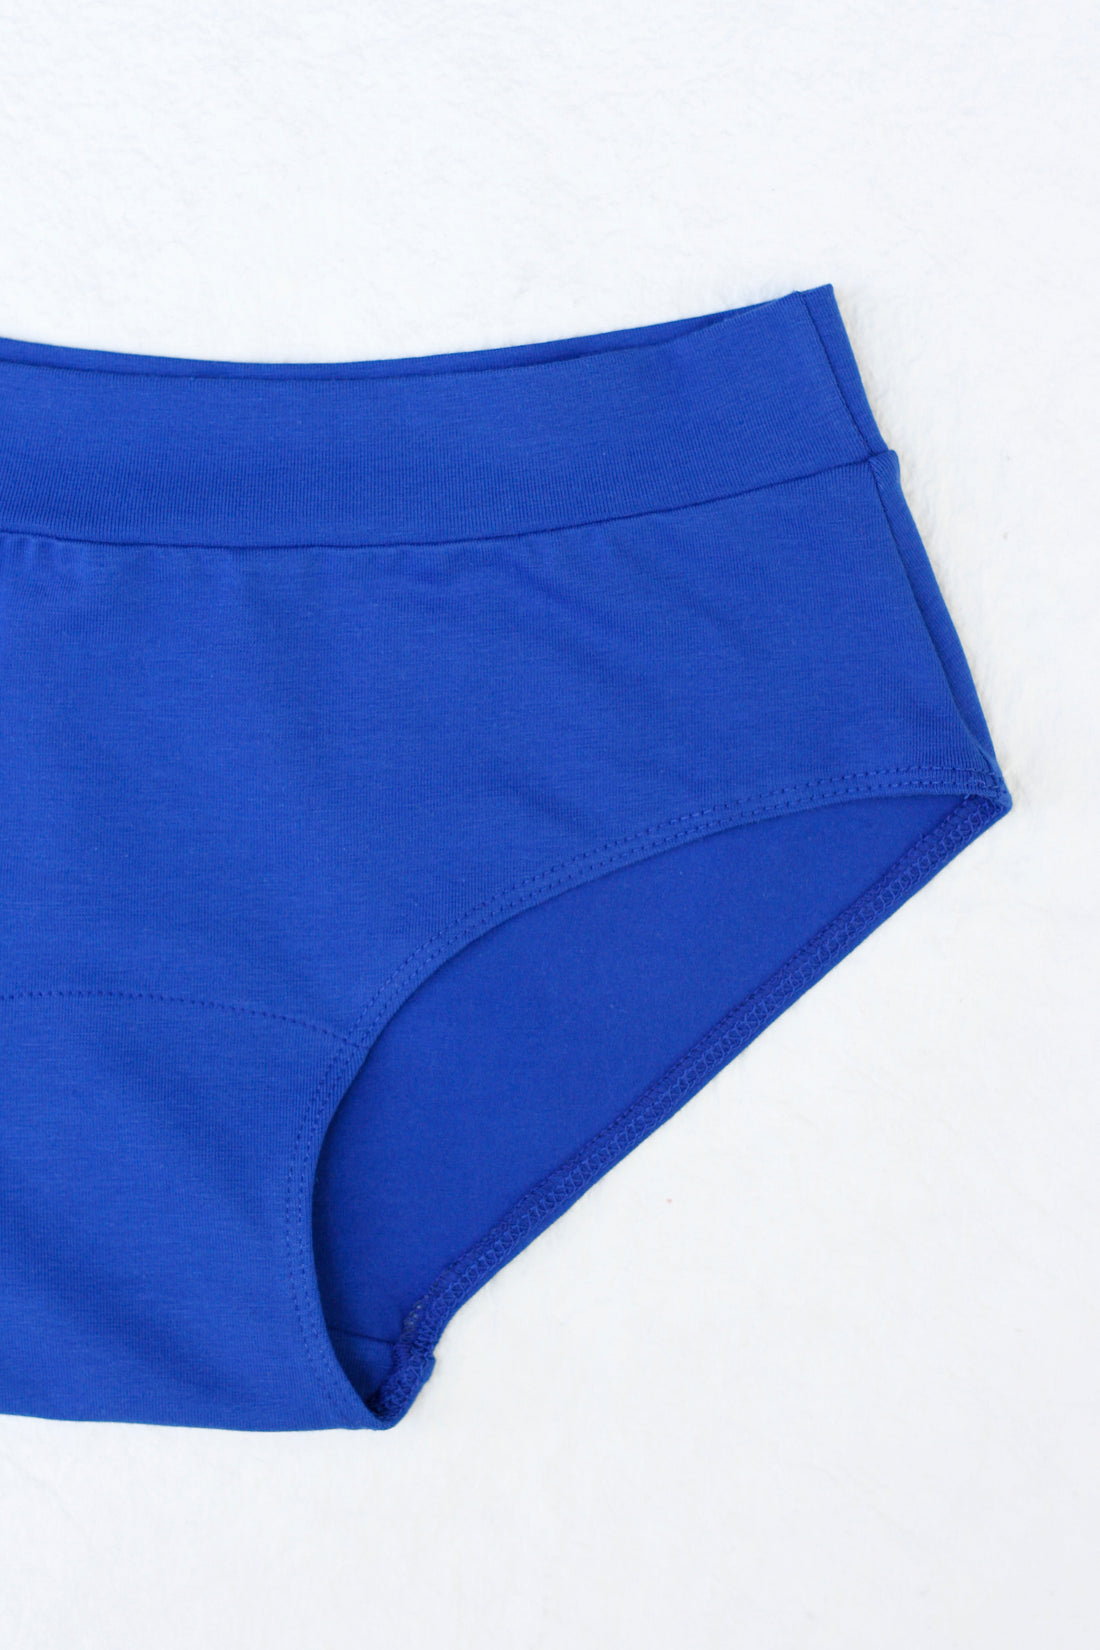 yenita® seamless microfiber high waist brief for ladies, single